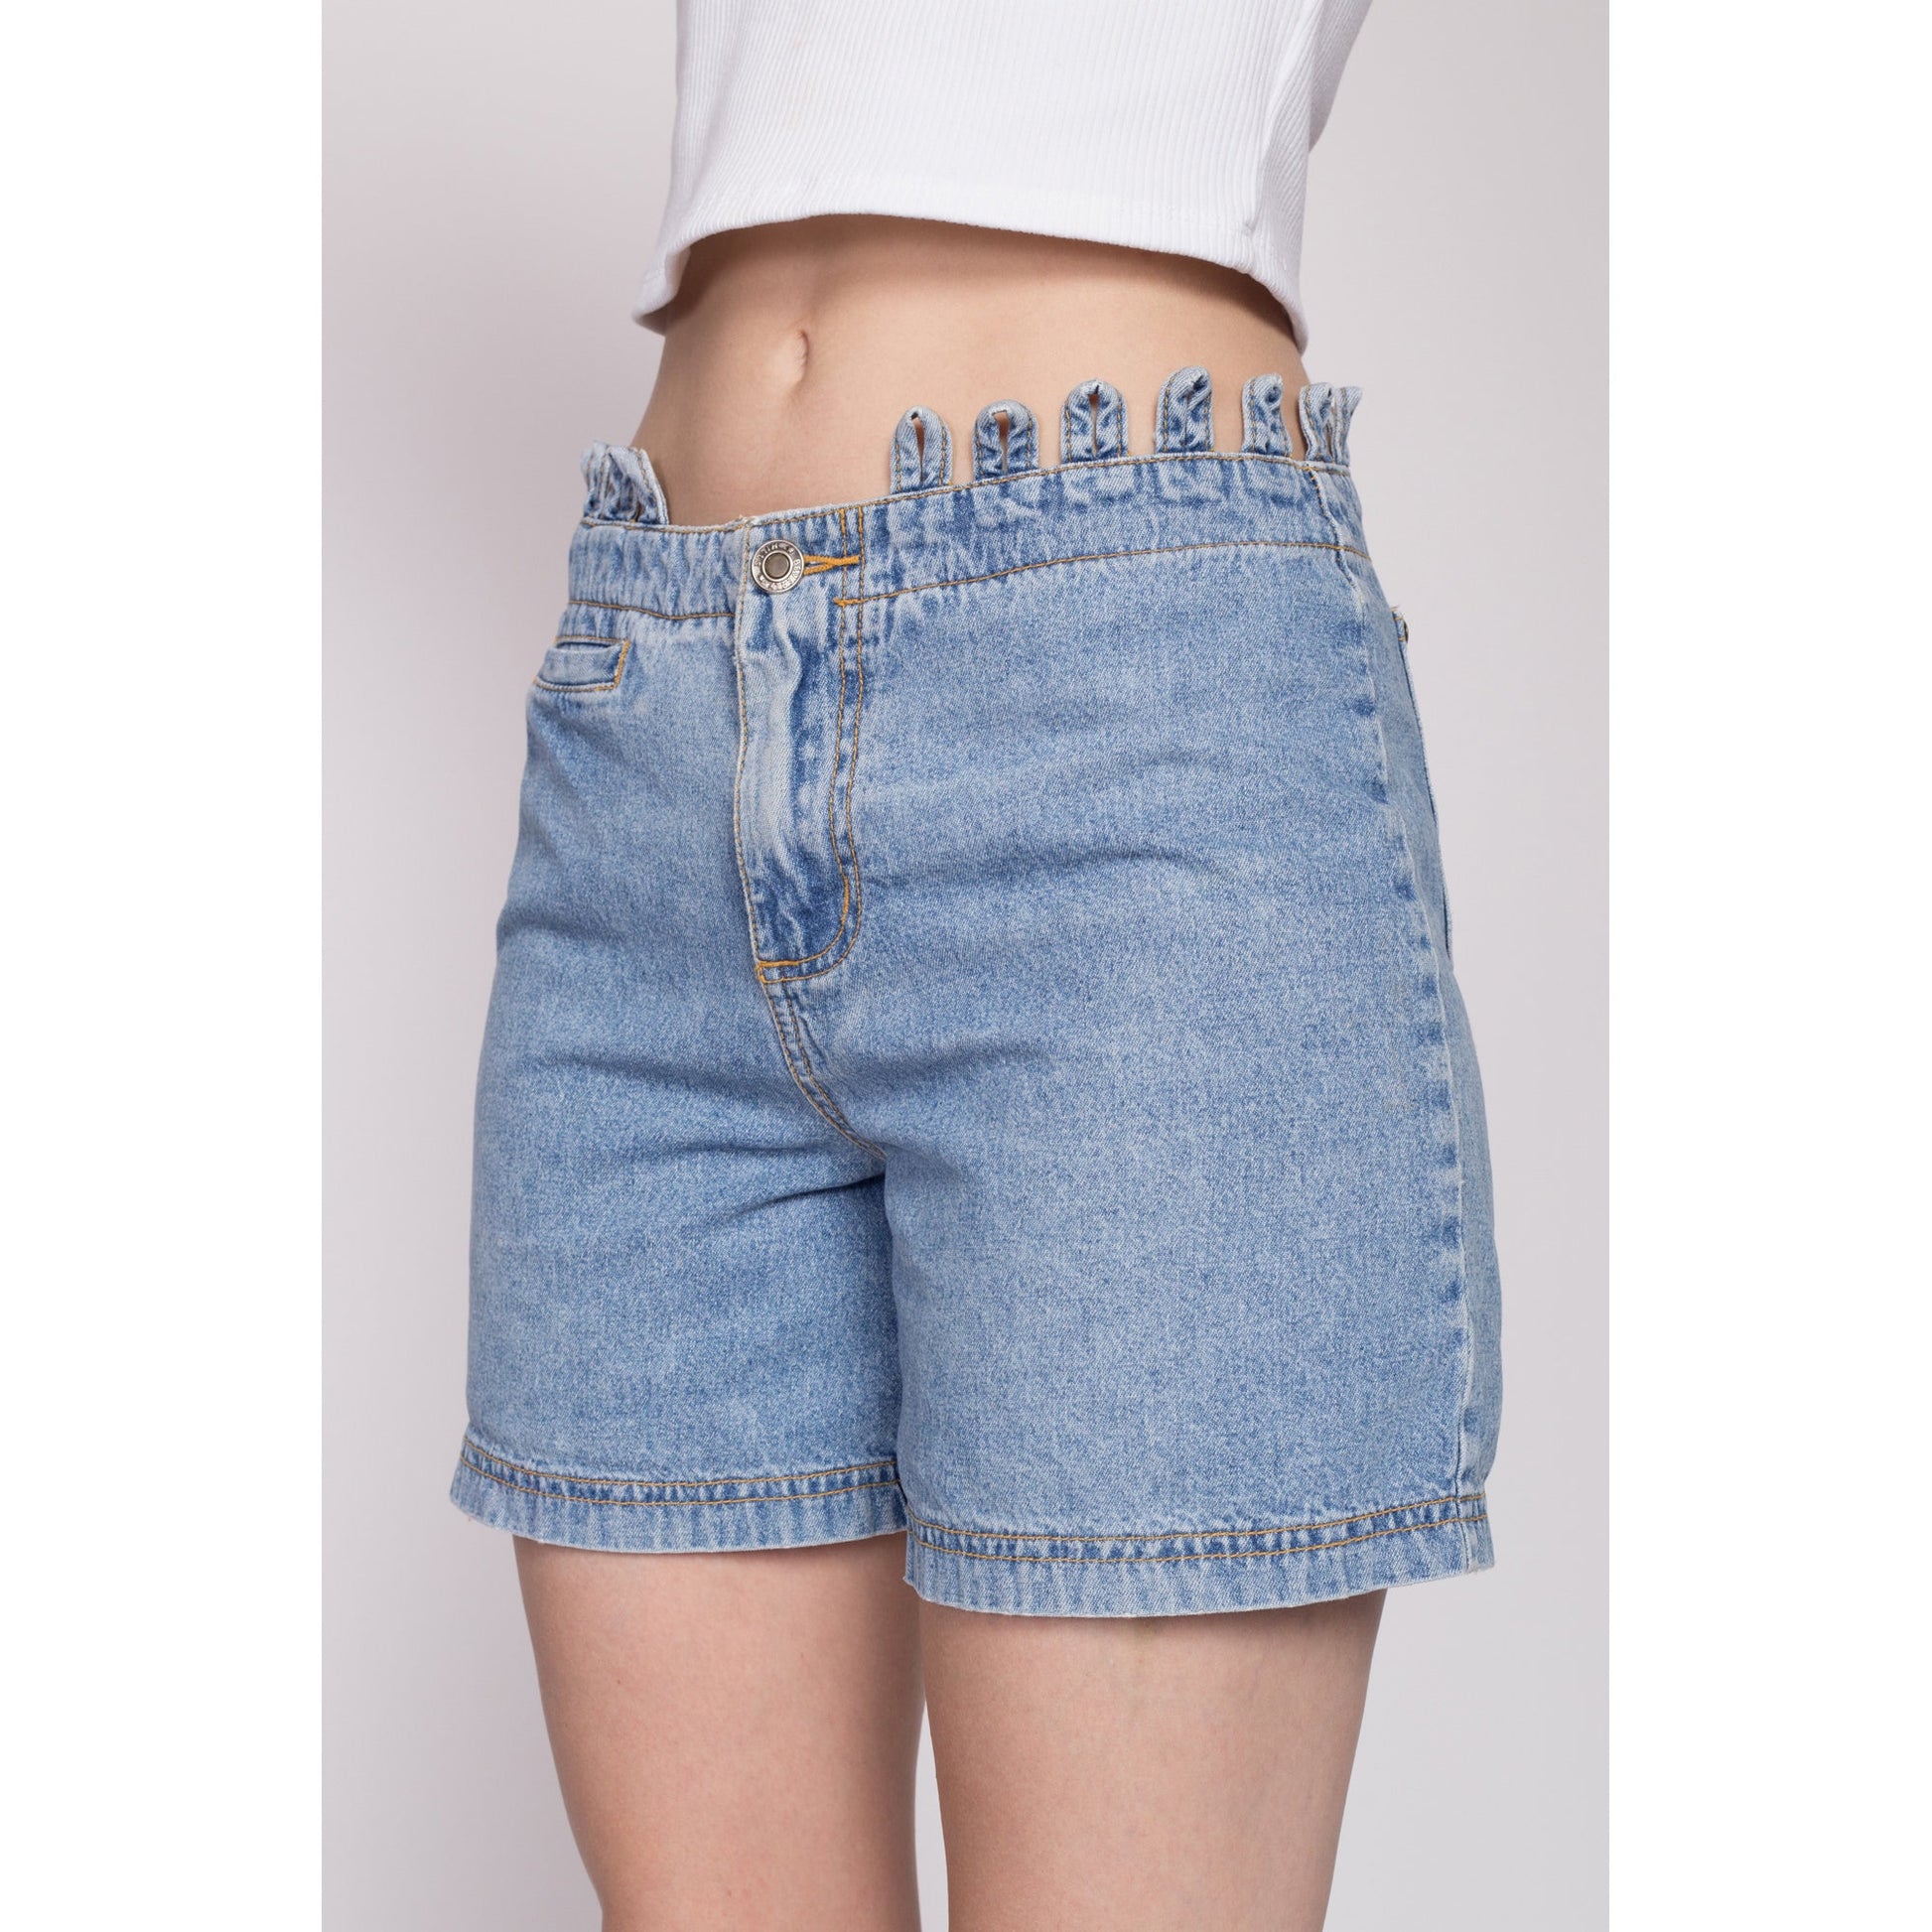 S| 90s Loop Waist Jean Shorts - Small | Vintage Light Wash Mid Rise Denim Shorts